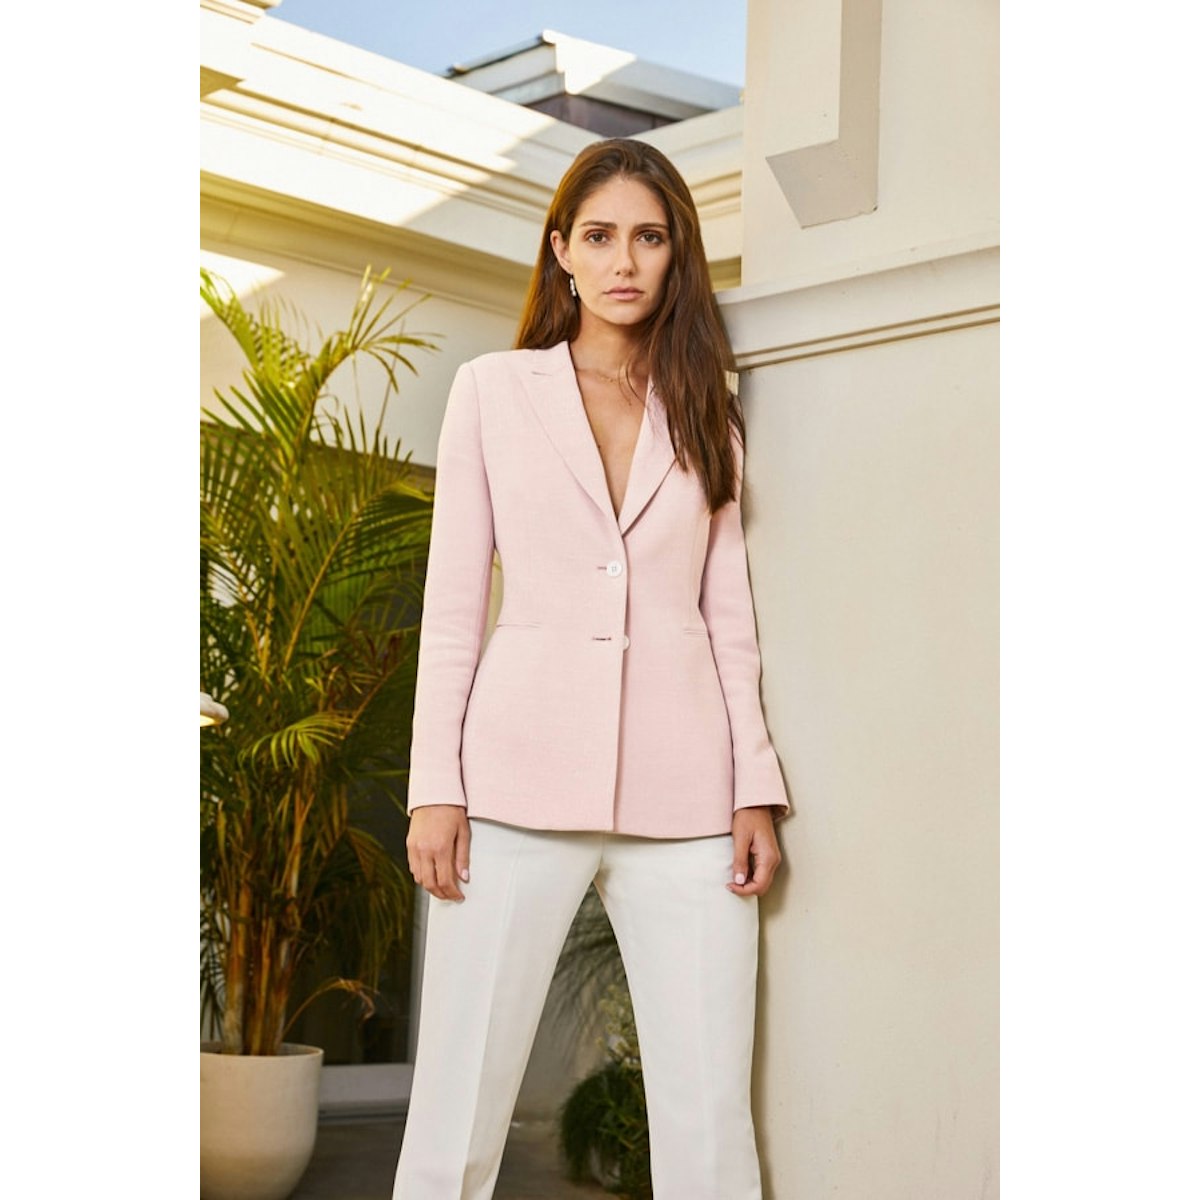 InStitchu Collection The Bridgewater Pink Linen Jacket